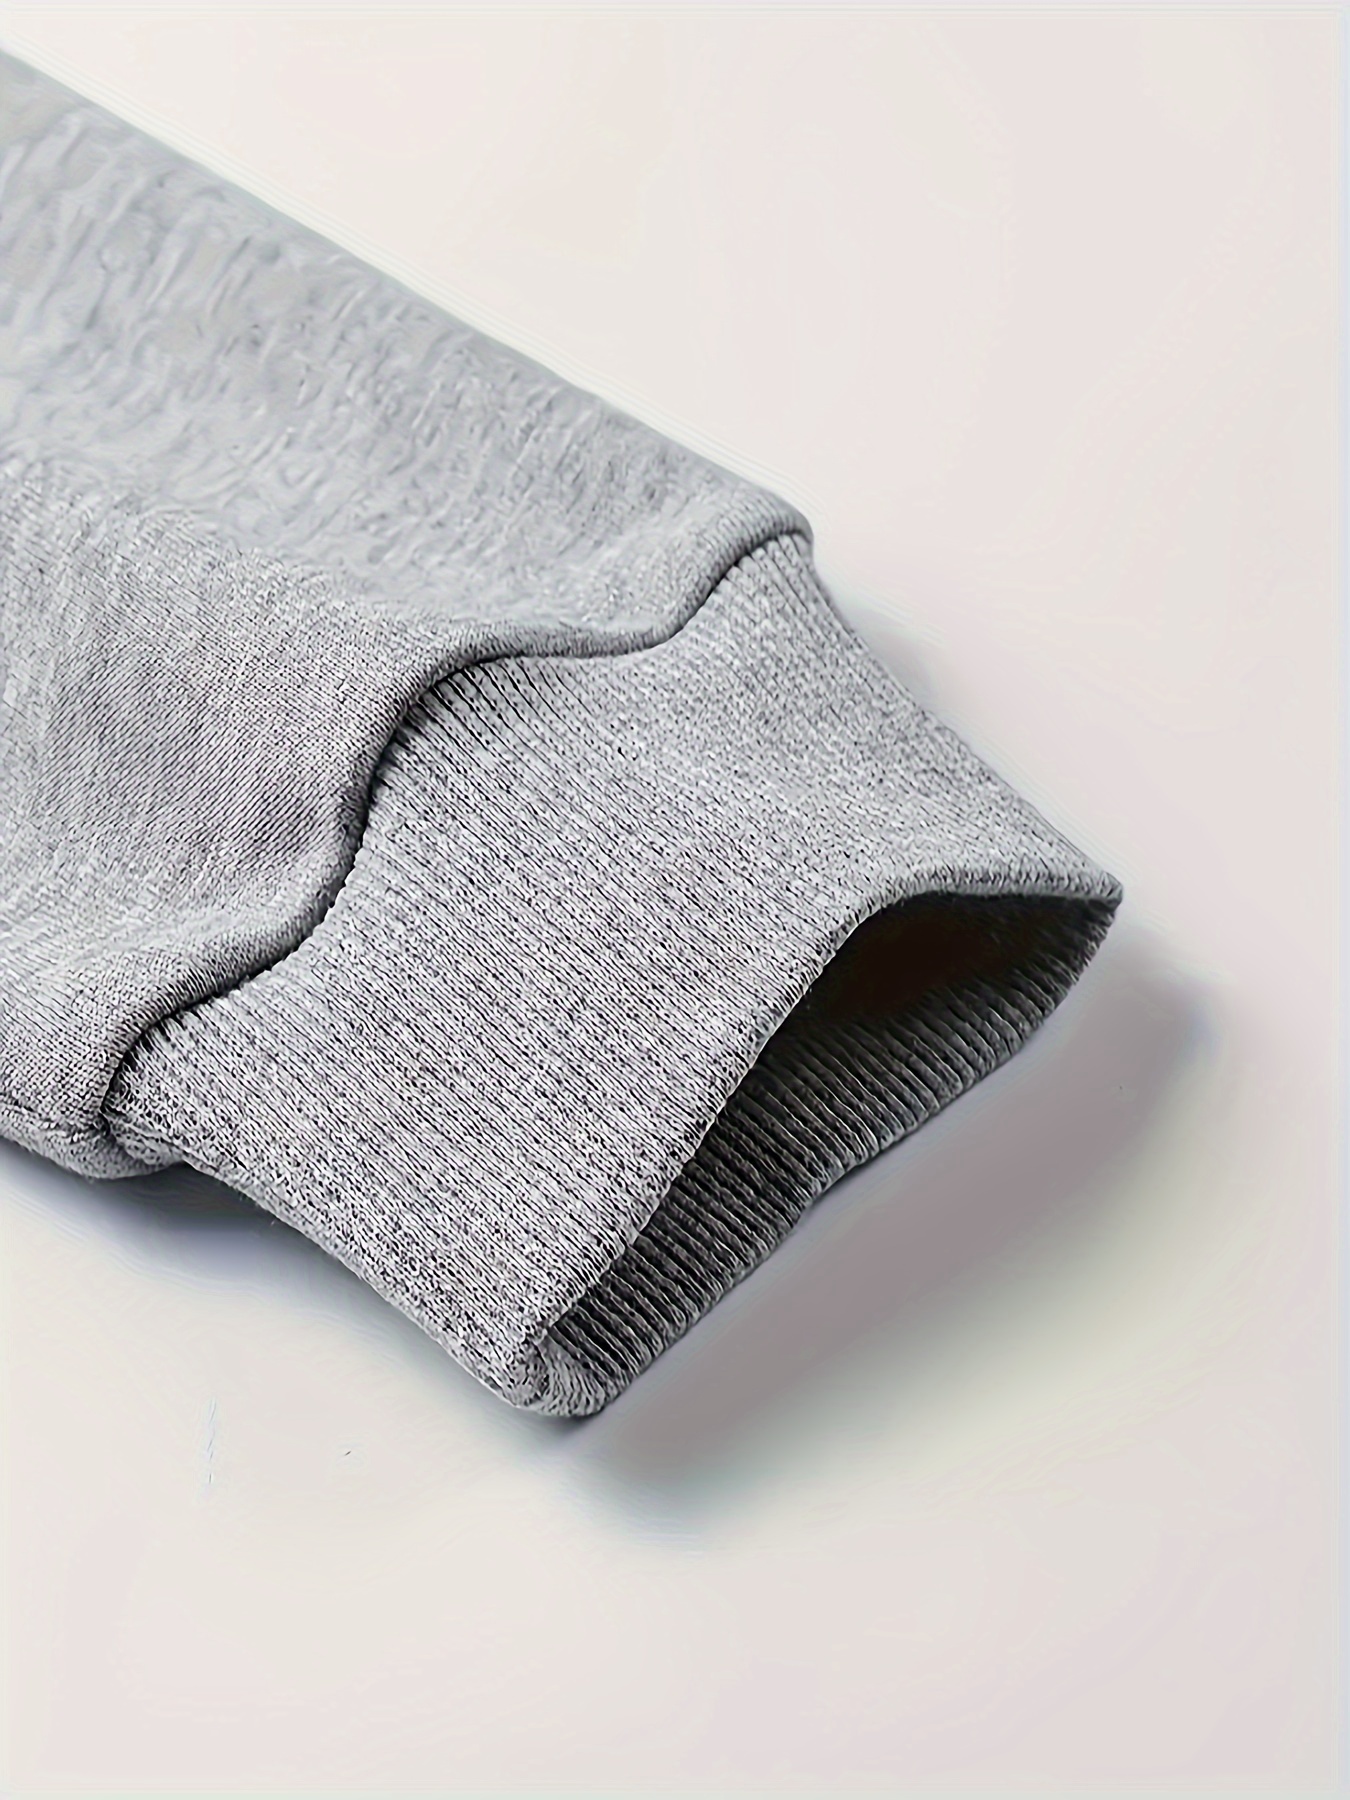  KS-QON BENG Blob Fish Pattern Men's Sweatshirts Crewneck  Pullover Casual Sweater Style : Clothing, Shoes & Jewelry